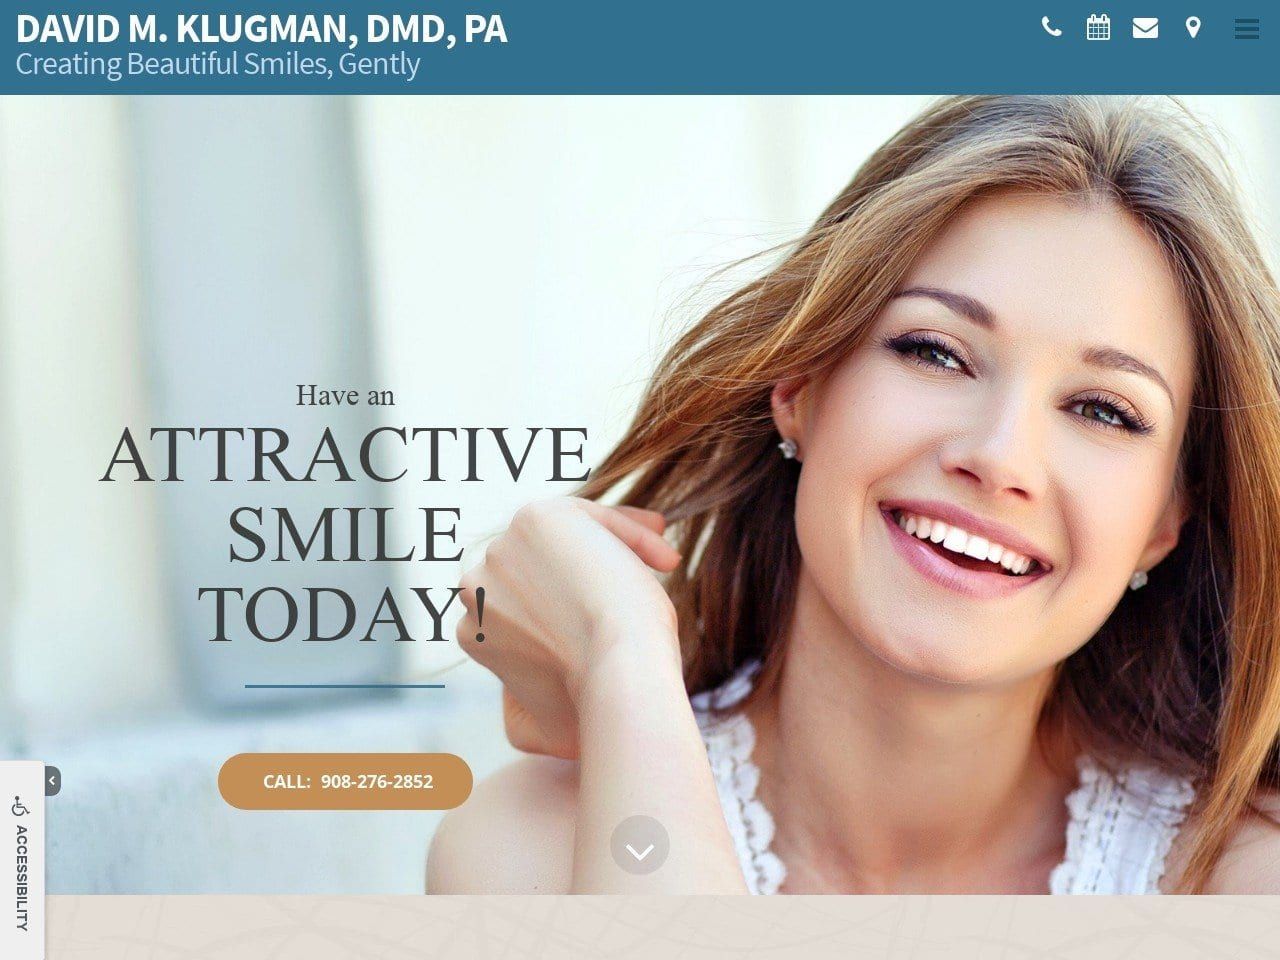 David M. Klugman DMD PA Website Screenshot from klugmanfamilydental.com